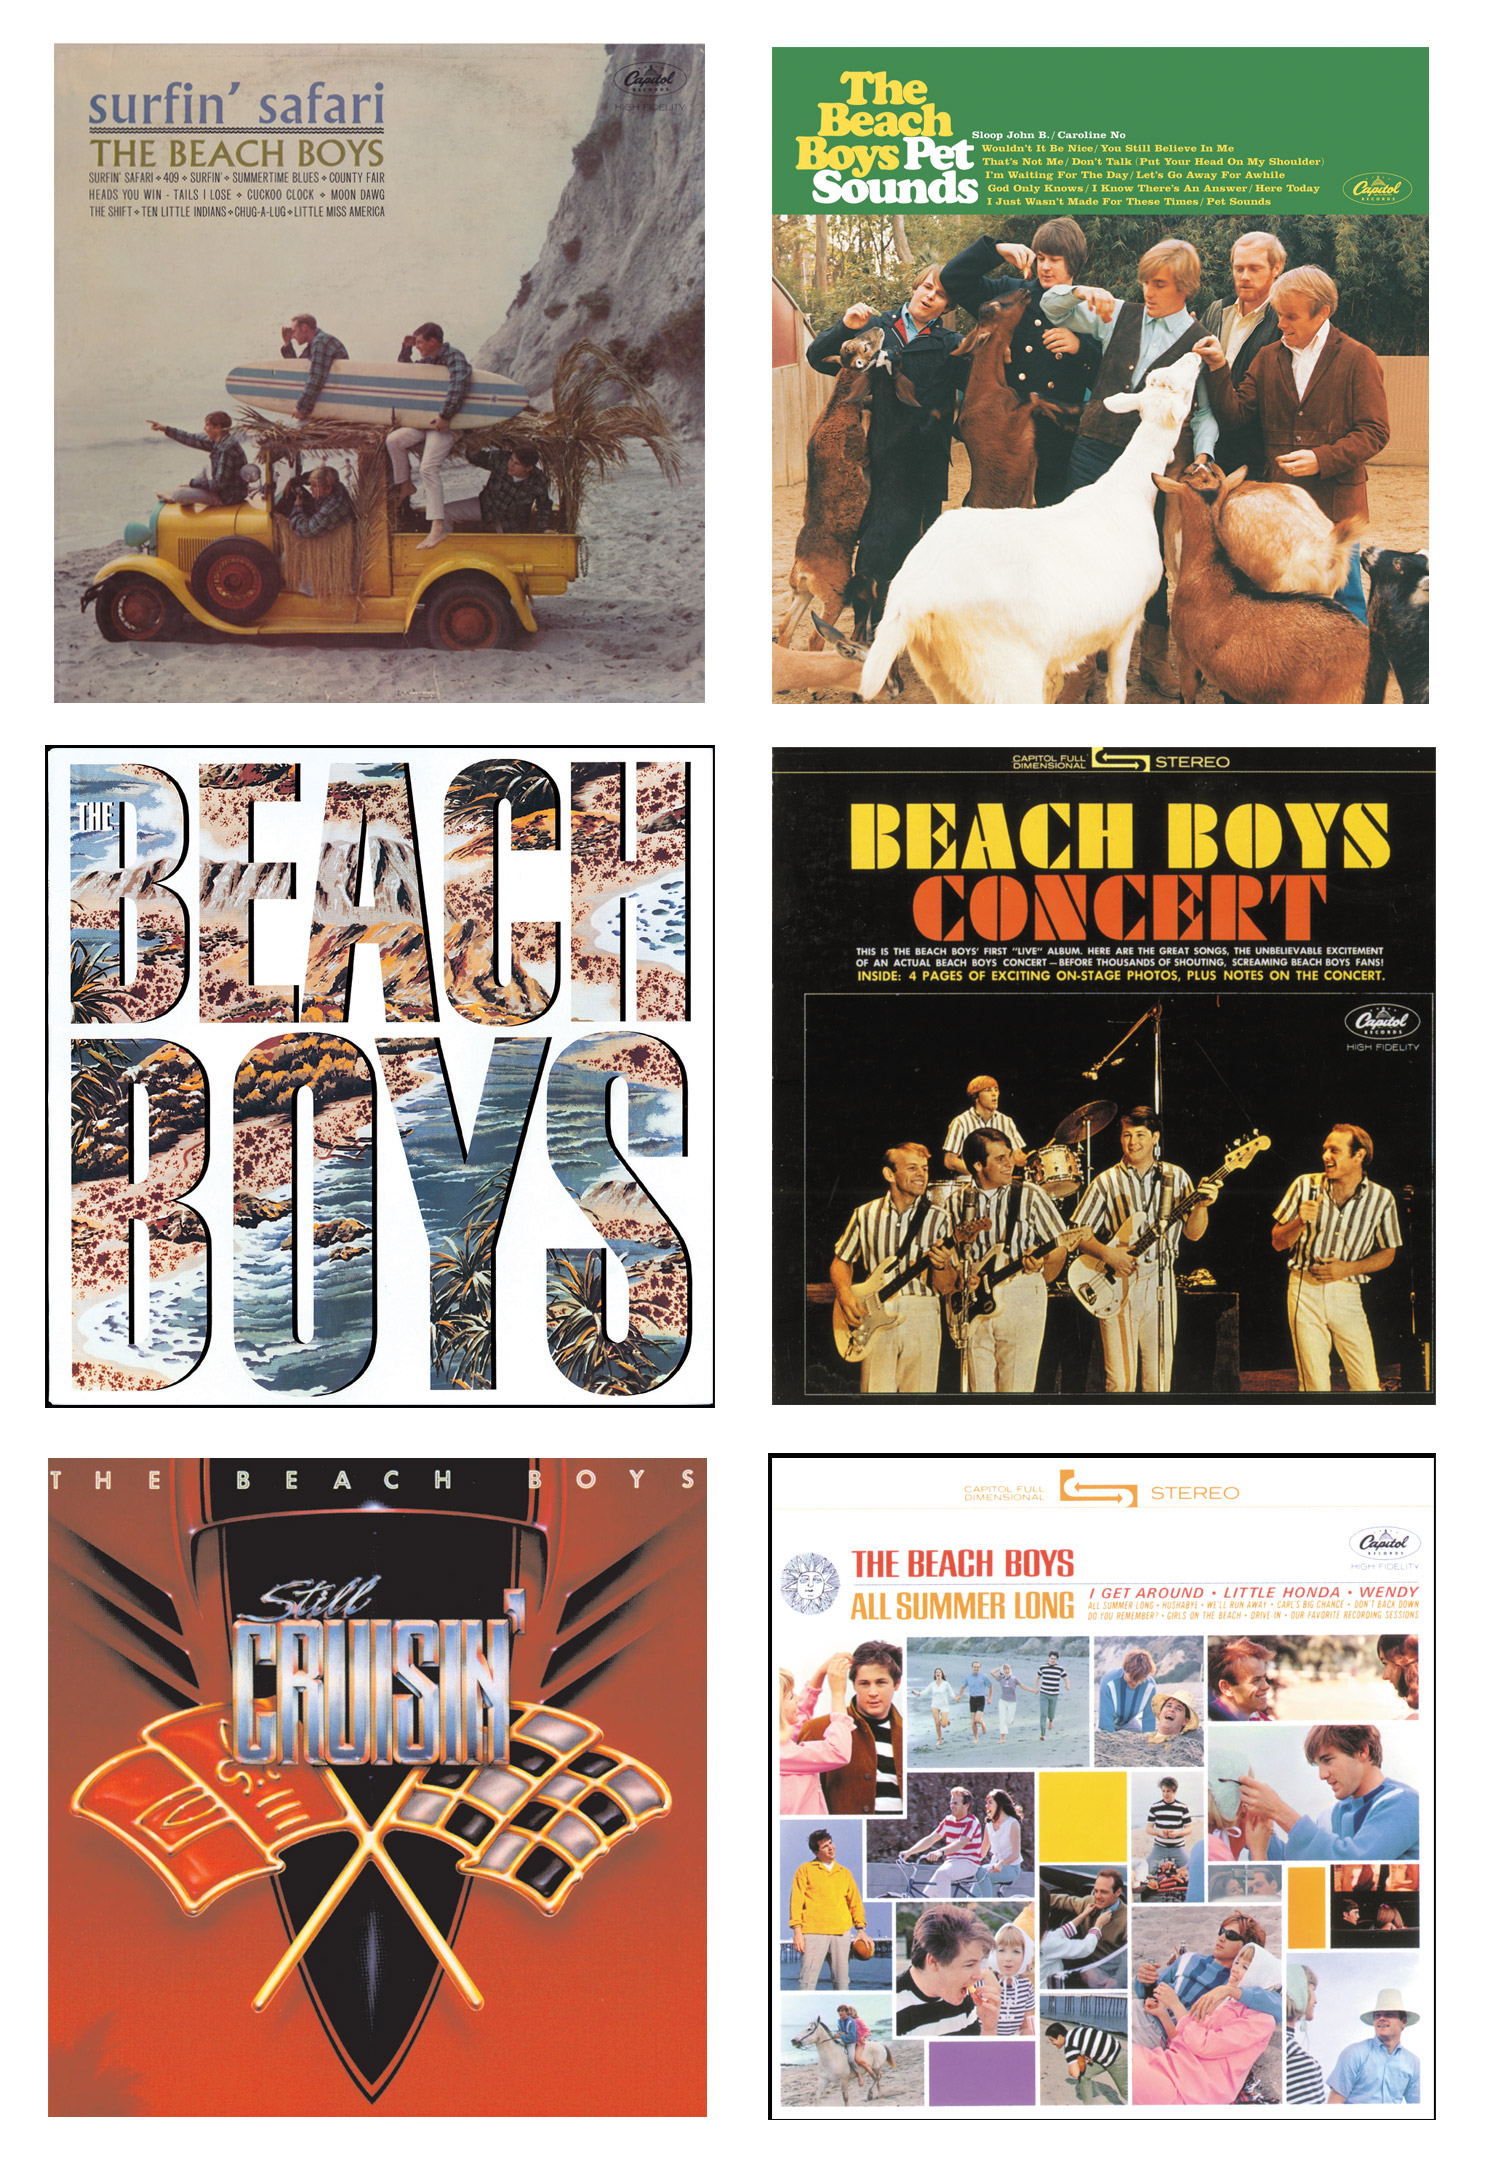 The Beach Boys x ROXY Collection